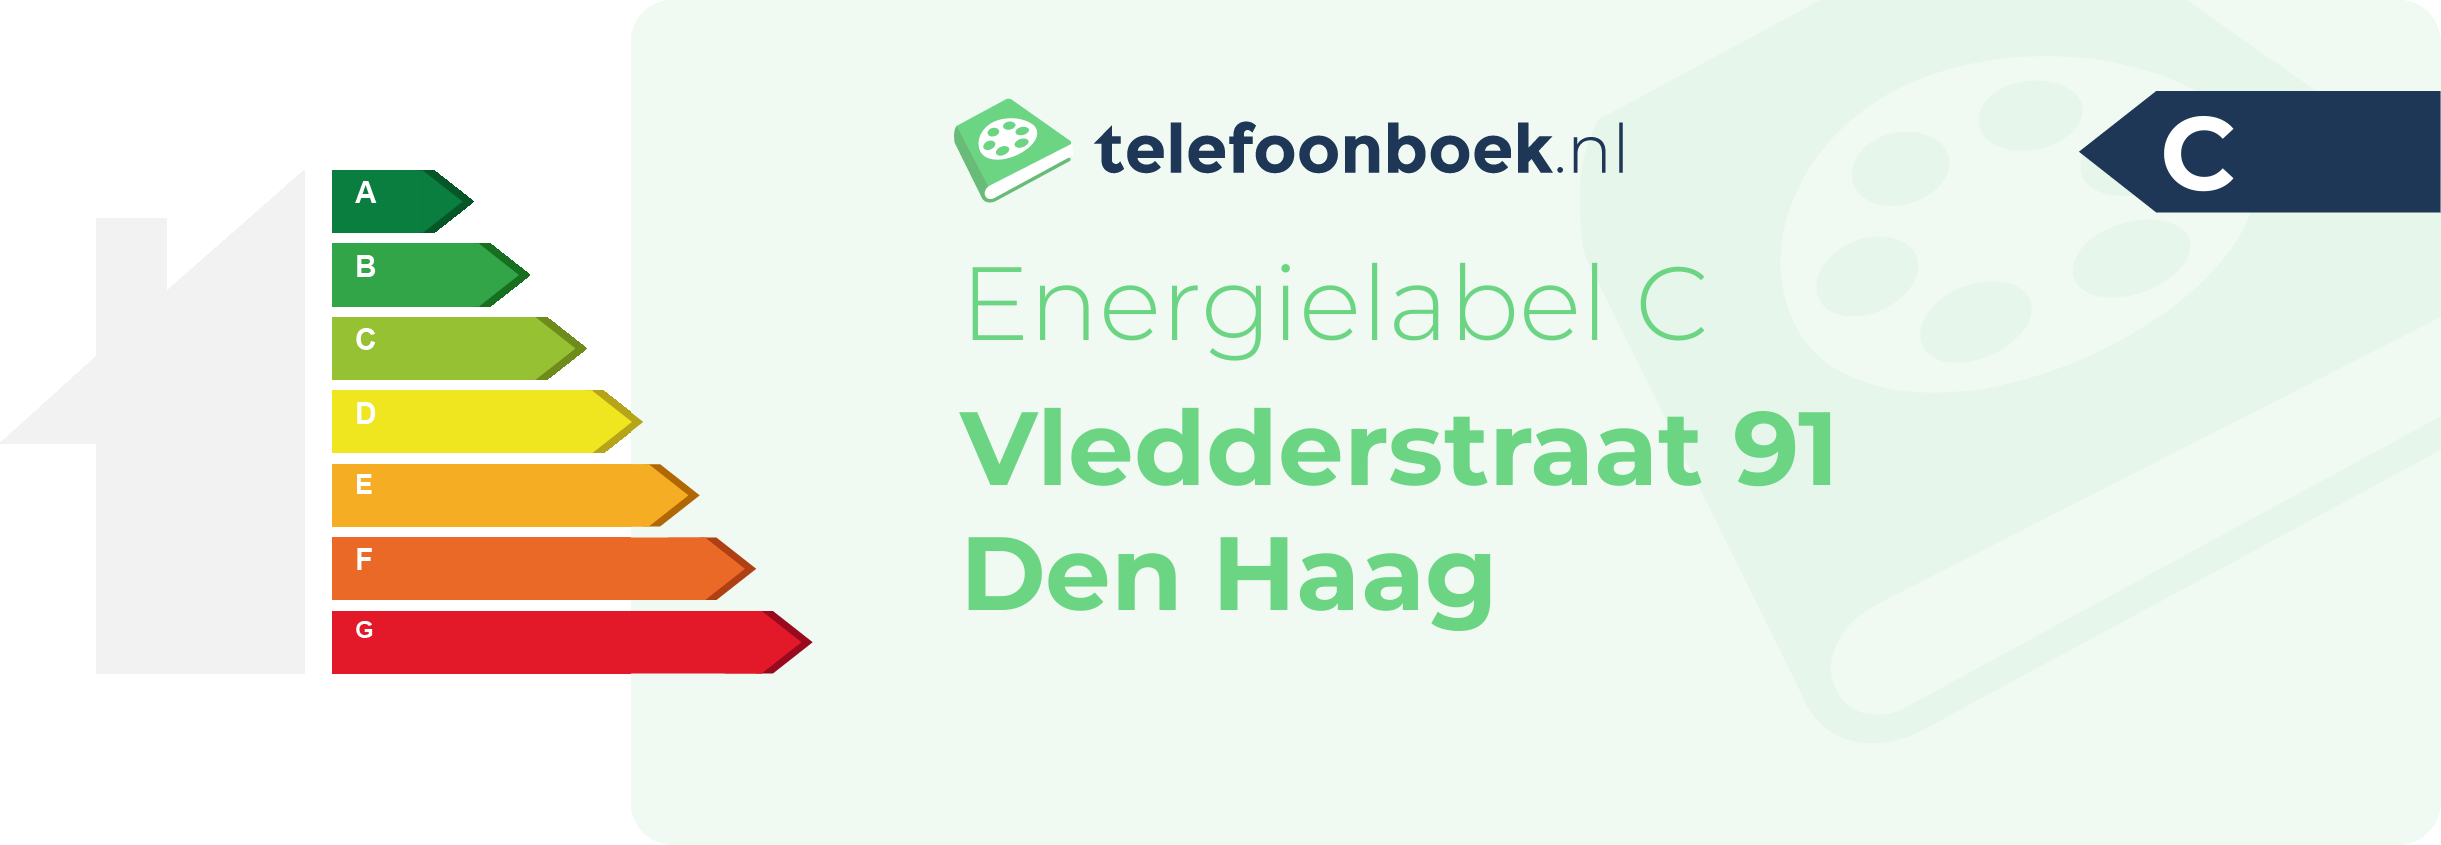 Energielabel Vledderstraat 91 Den Haag